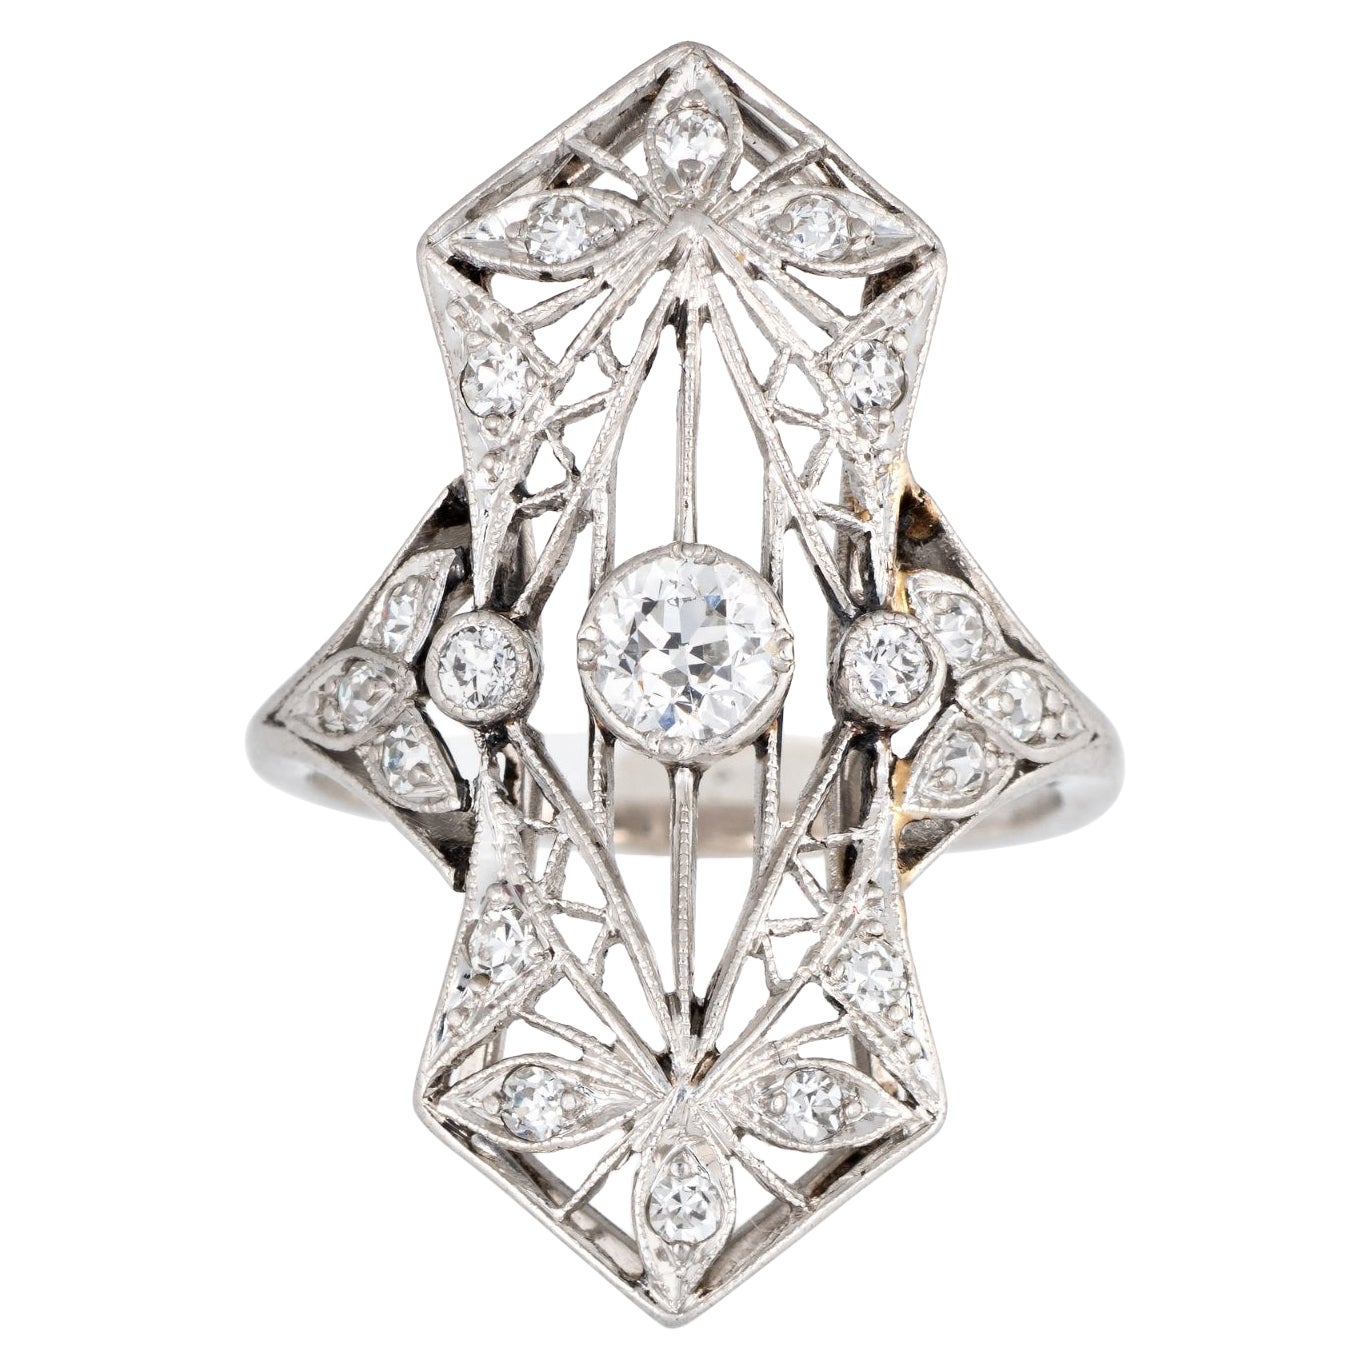 Antique Edwardian Diamond Ring Platinum Flower Design Vintage Plaque Jewelry 5